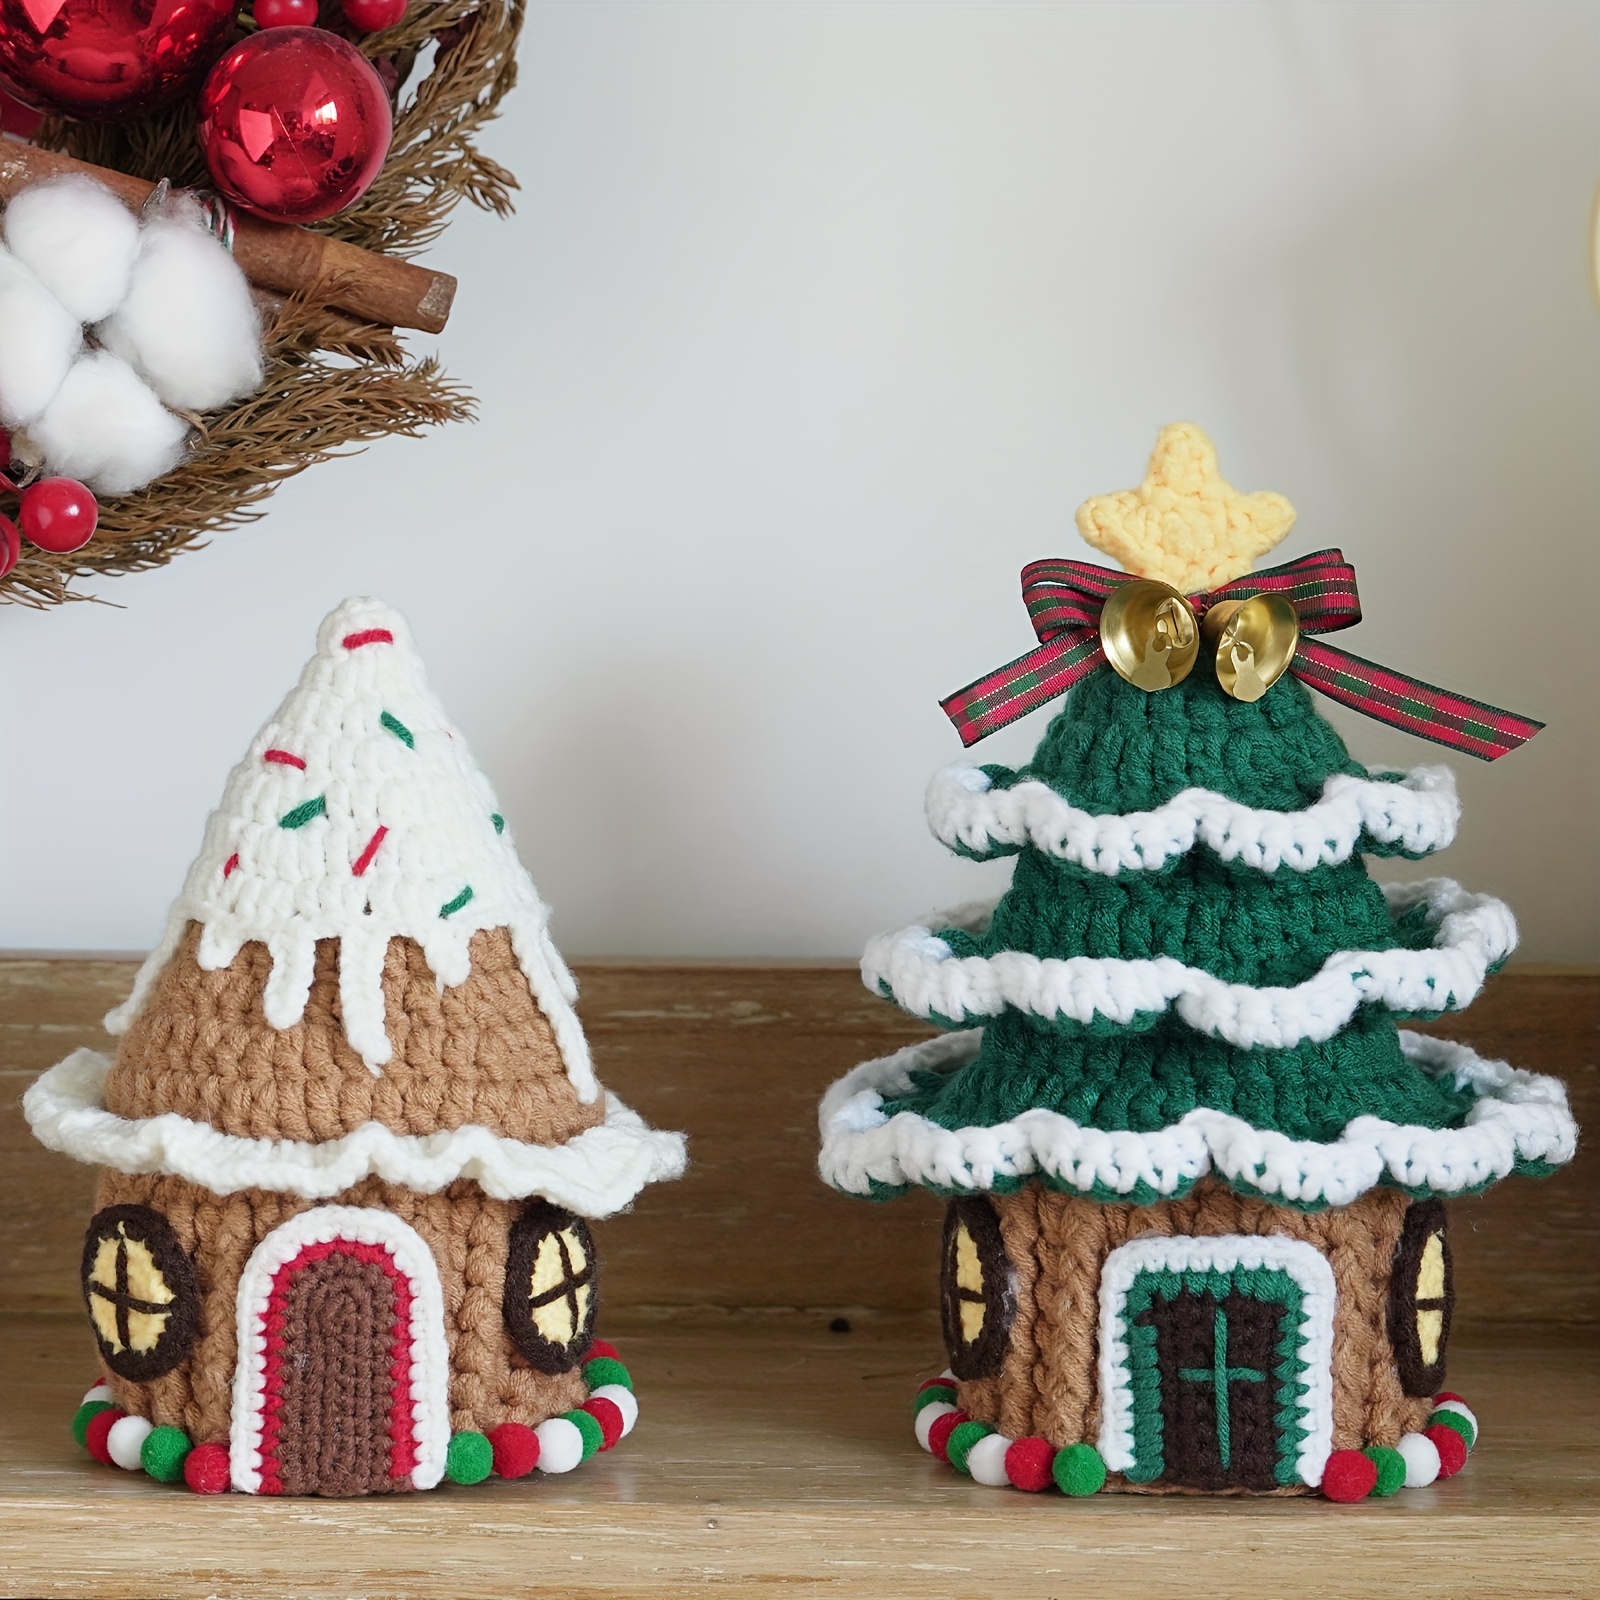 Hoooked Crochet Kit Christmas Tree - Recycled Christmas Decoration –  SewProCrafts Ltd